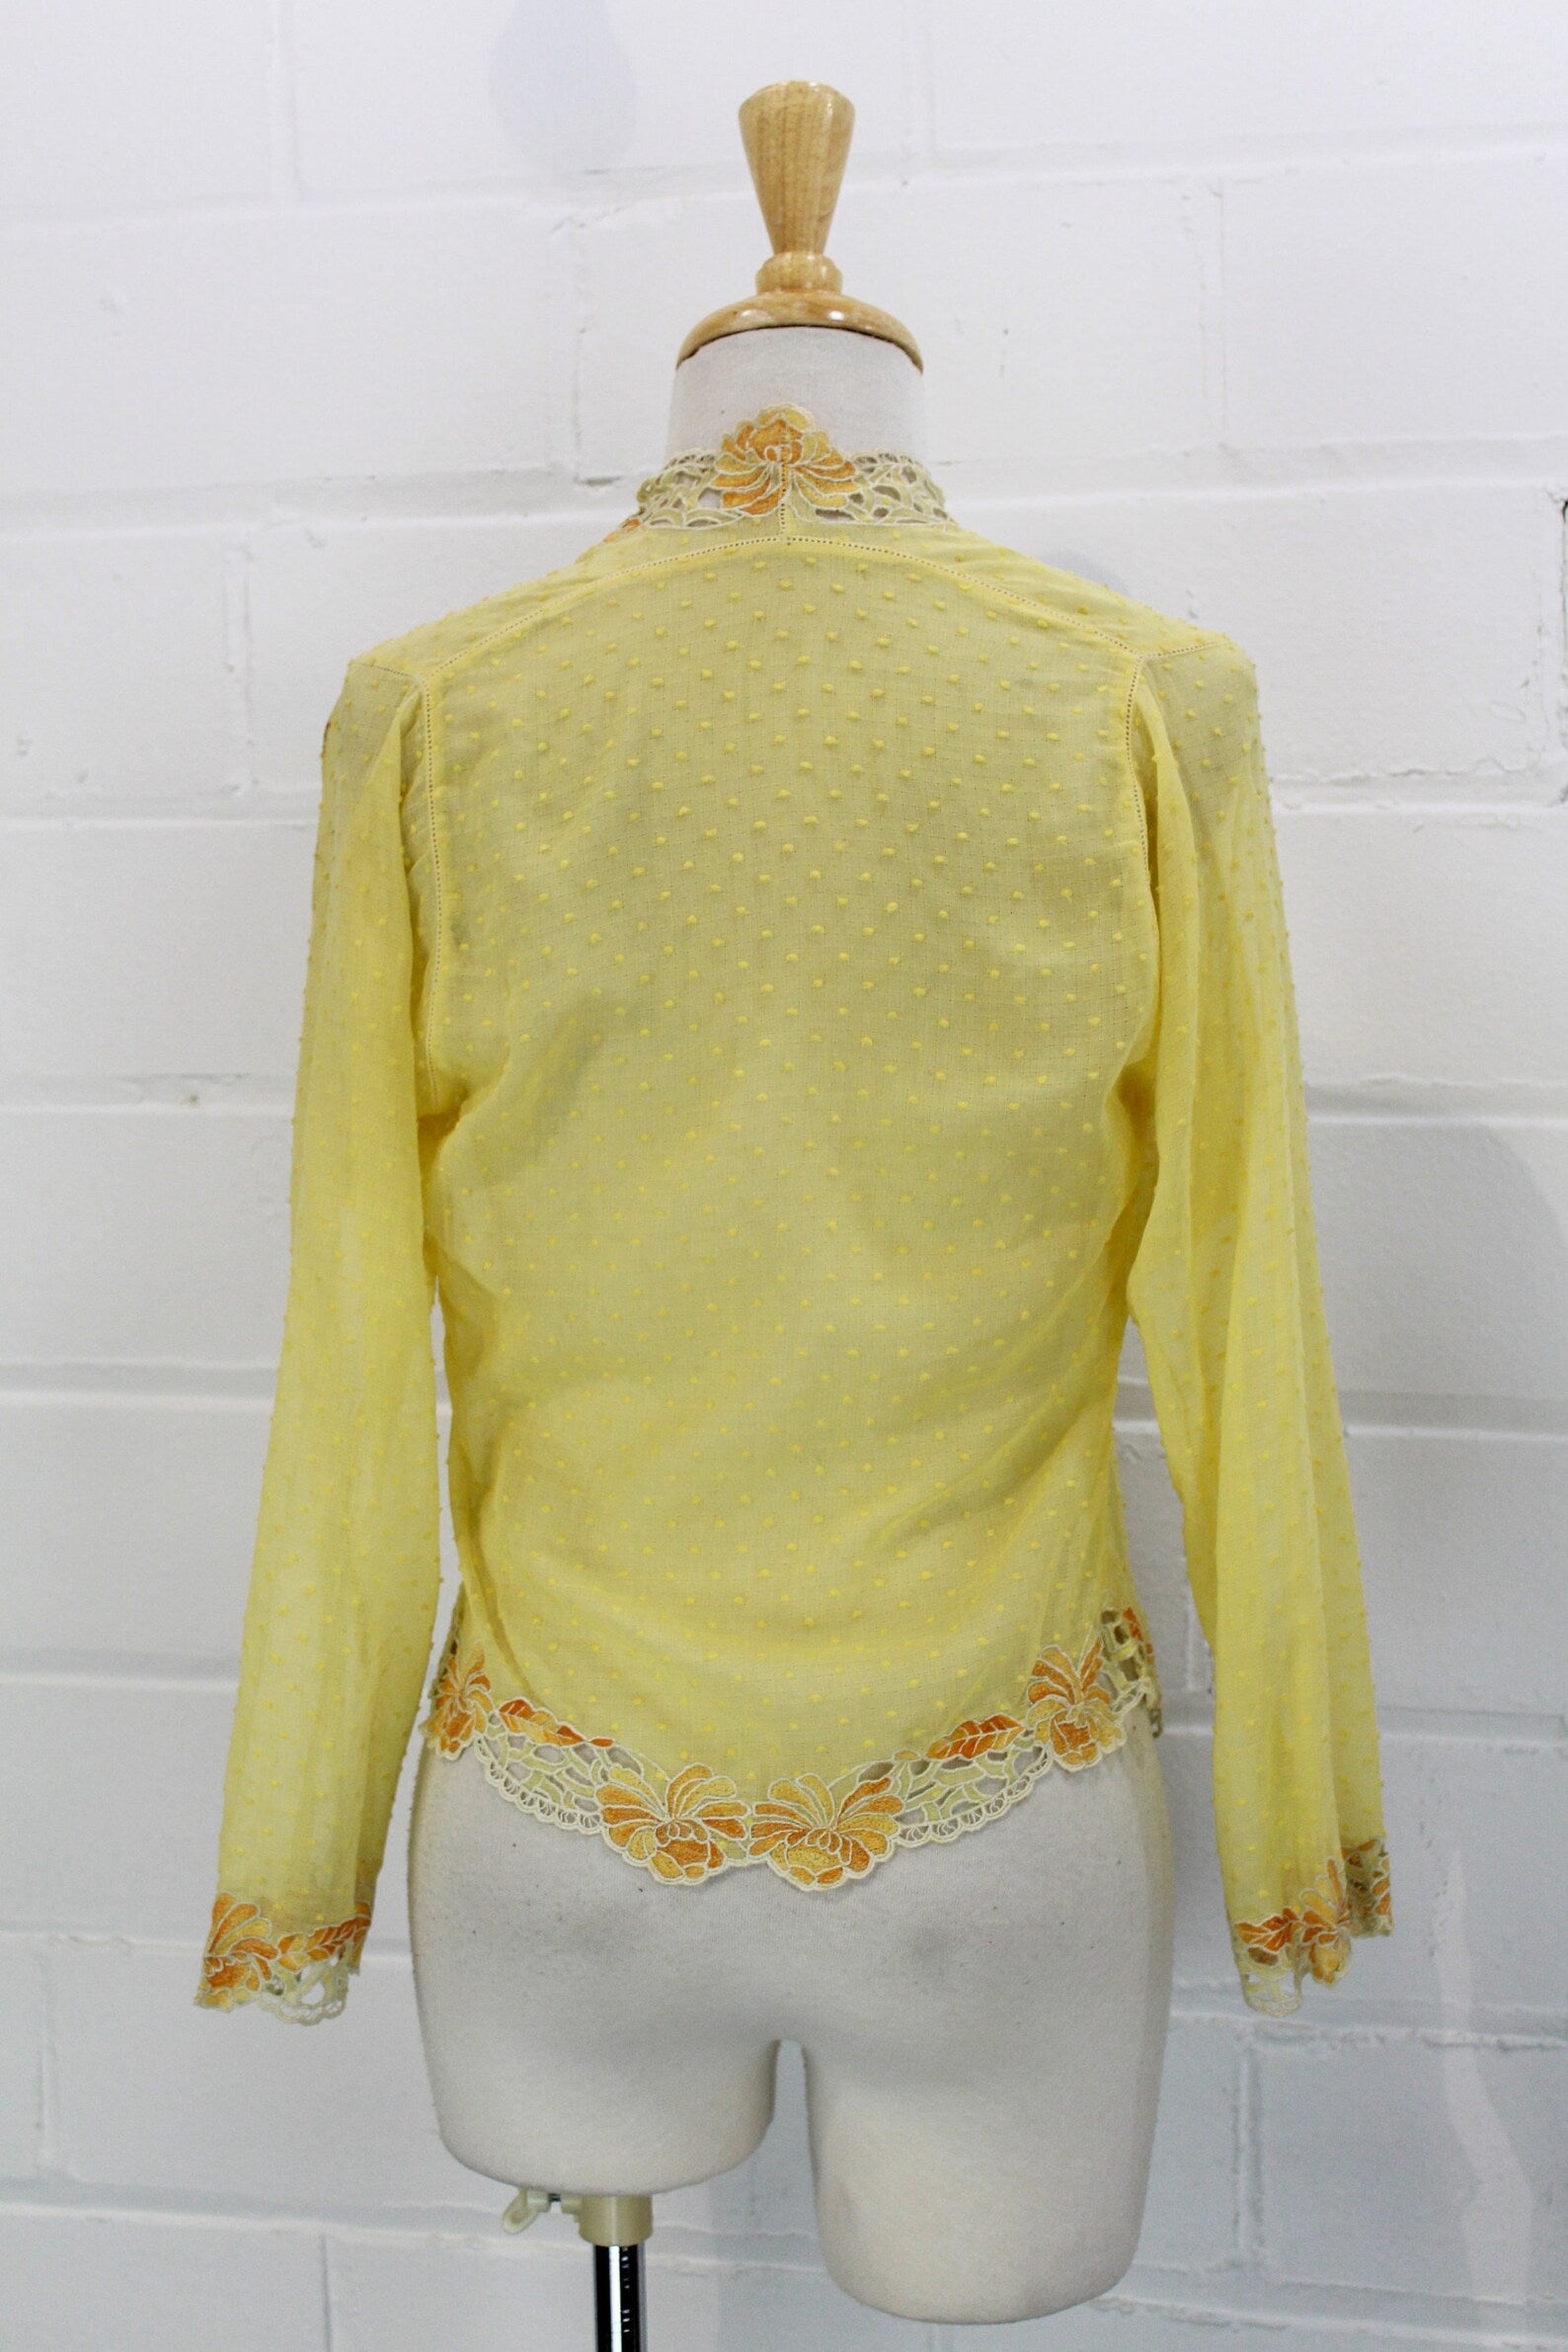 Vintage 1930s Yellow Cotton Swiss Dot Cardigan/Jacket with Orange Lace Trim, Size Small